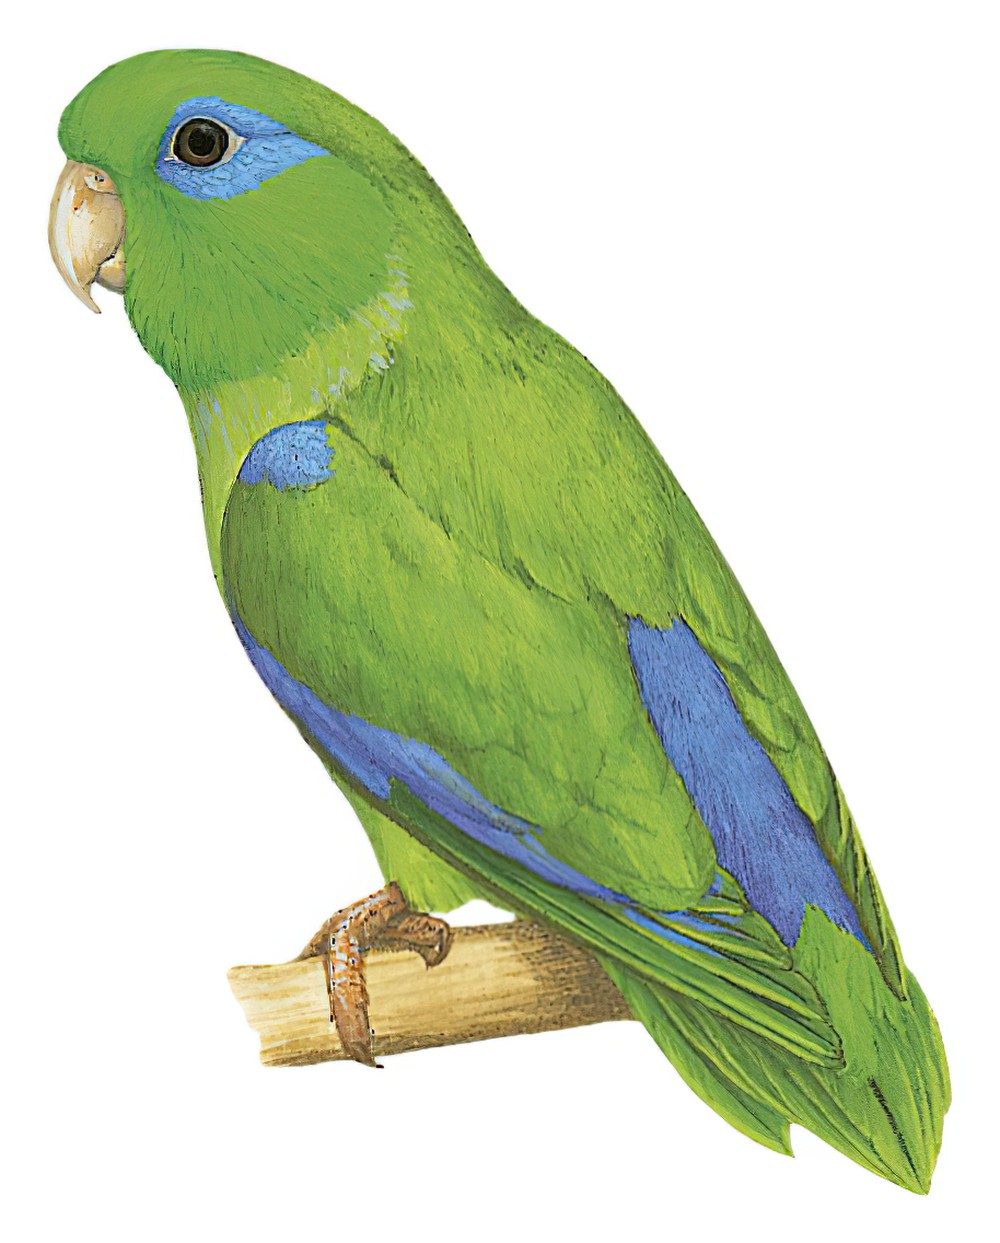 Spectacled Parrotlet / Forpus conspicillatus